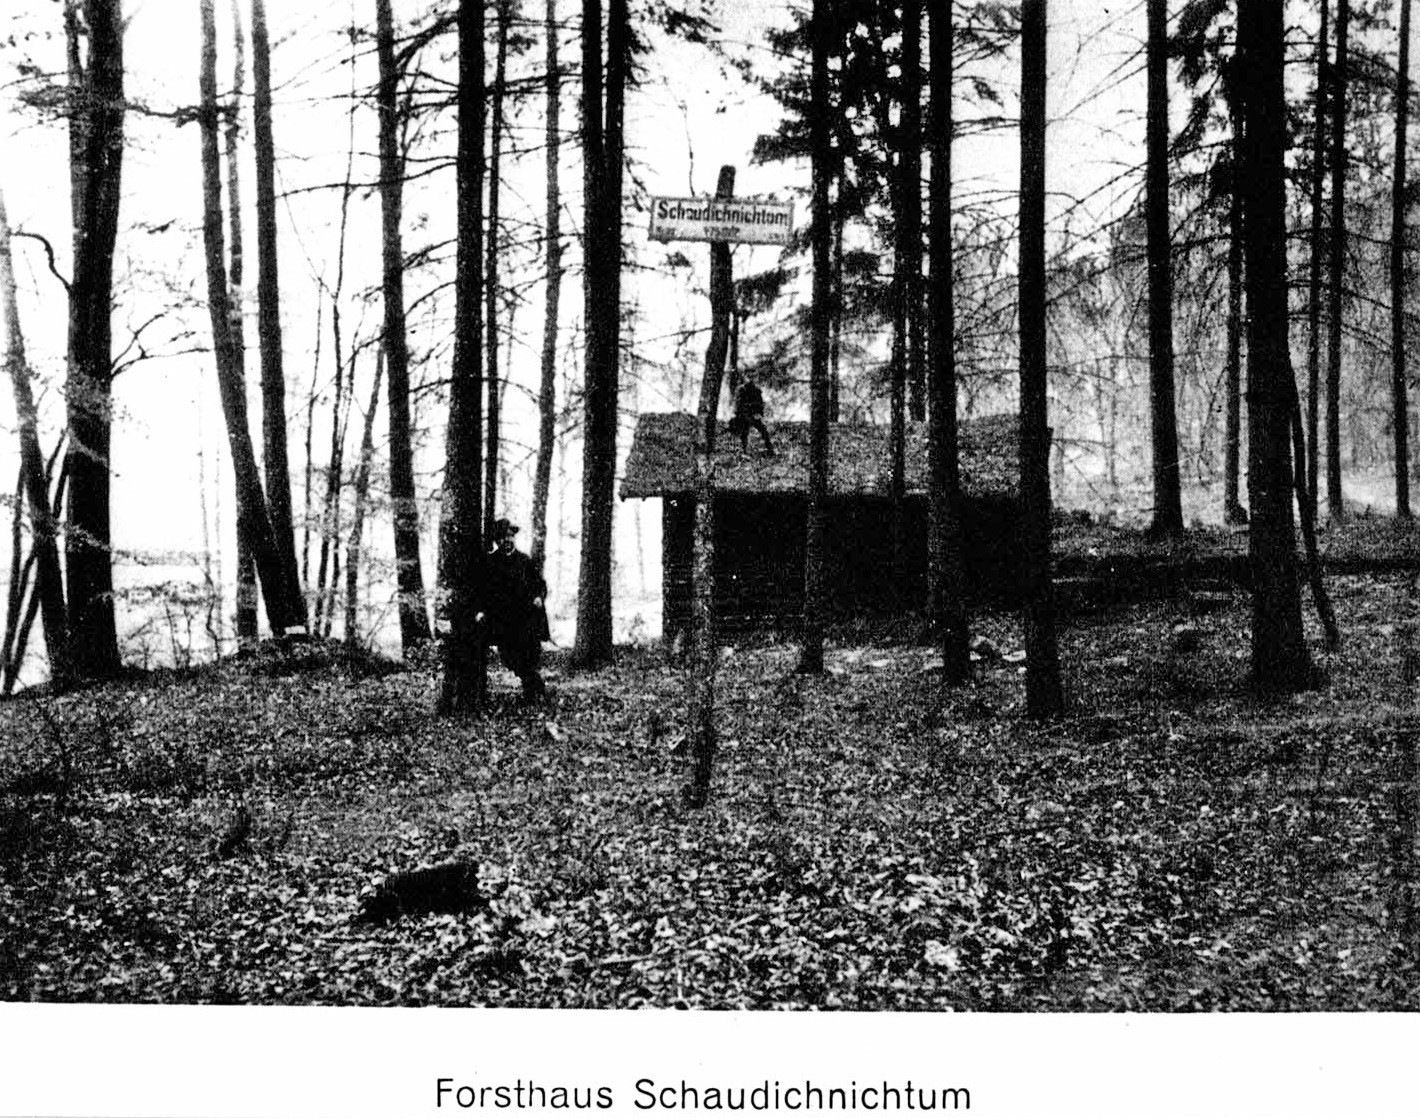 Foto-Sammlung Adolf Krapp, Ordner 13: Forsthaus Schau Dich nicht um, 1904 (Museumsgesellschaft Bad Dürkheim e.V. CC BY-NC-SA)